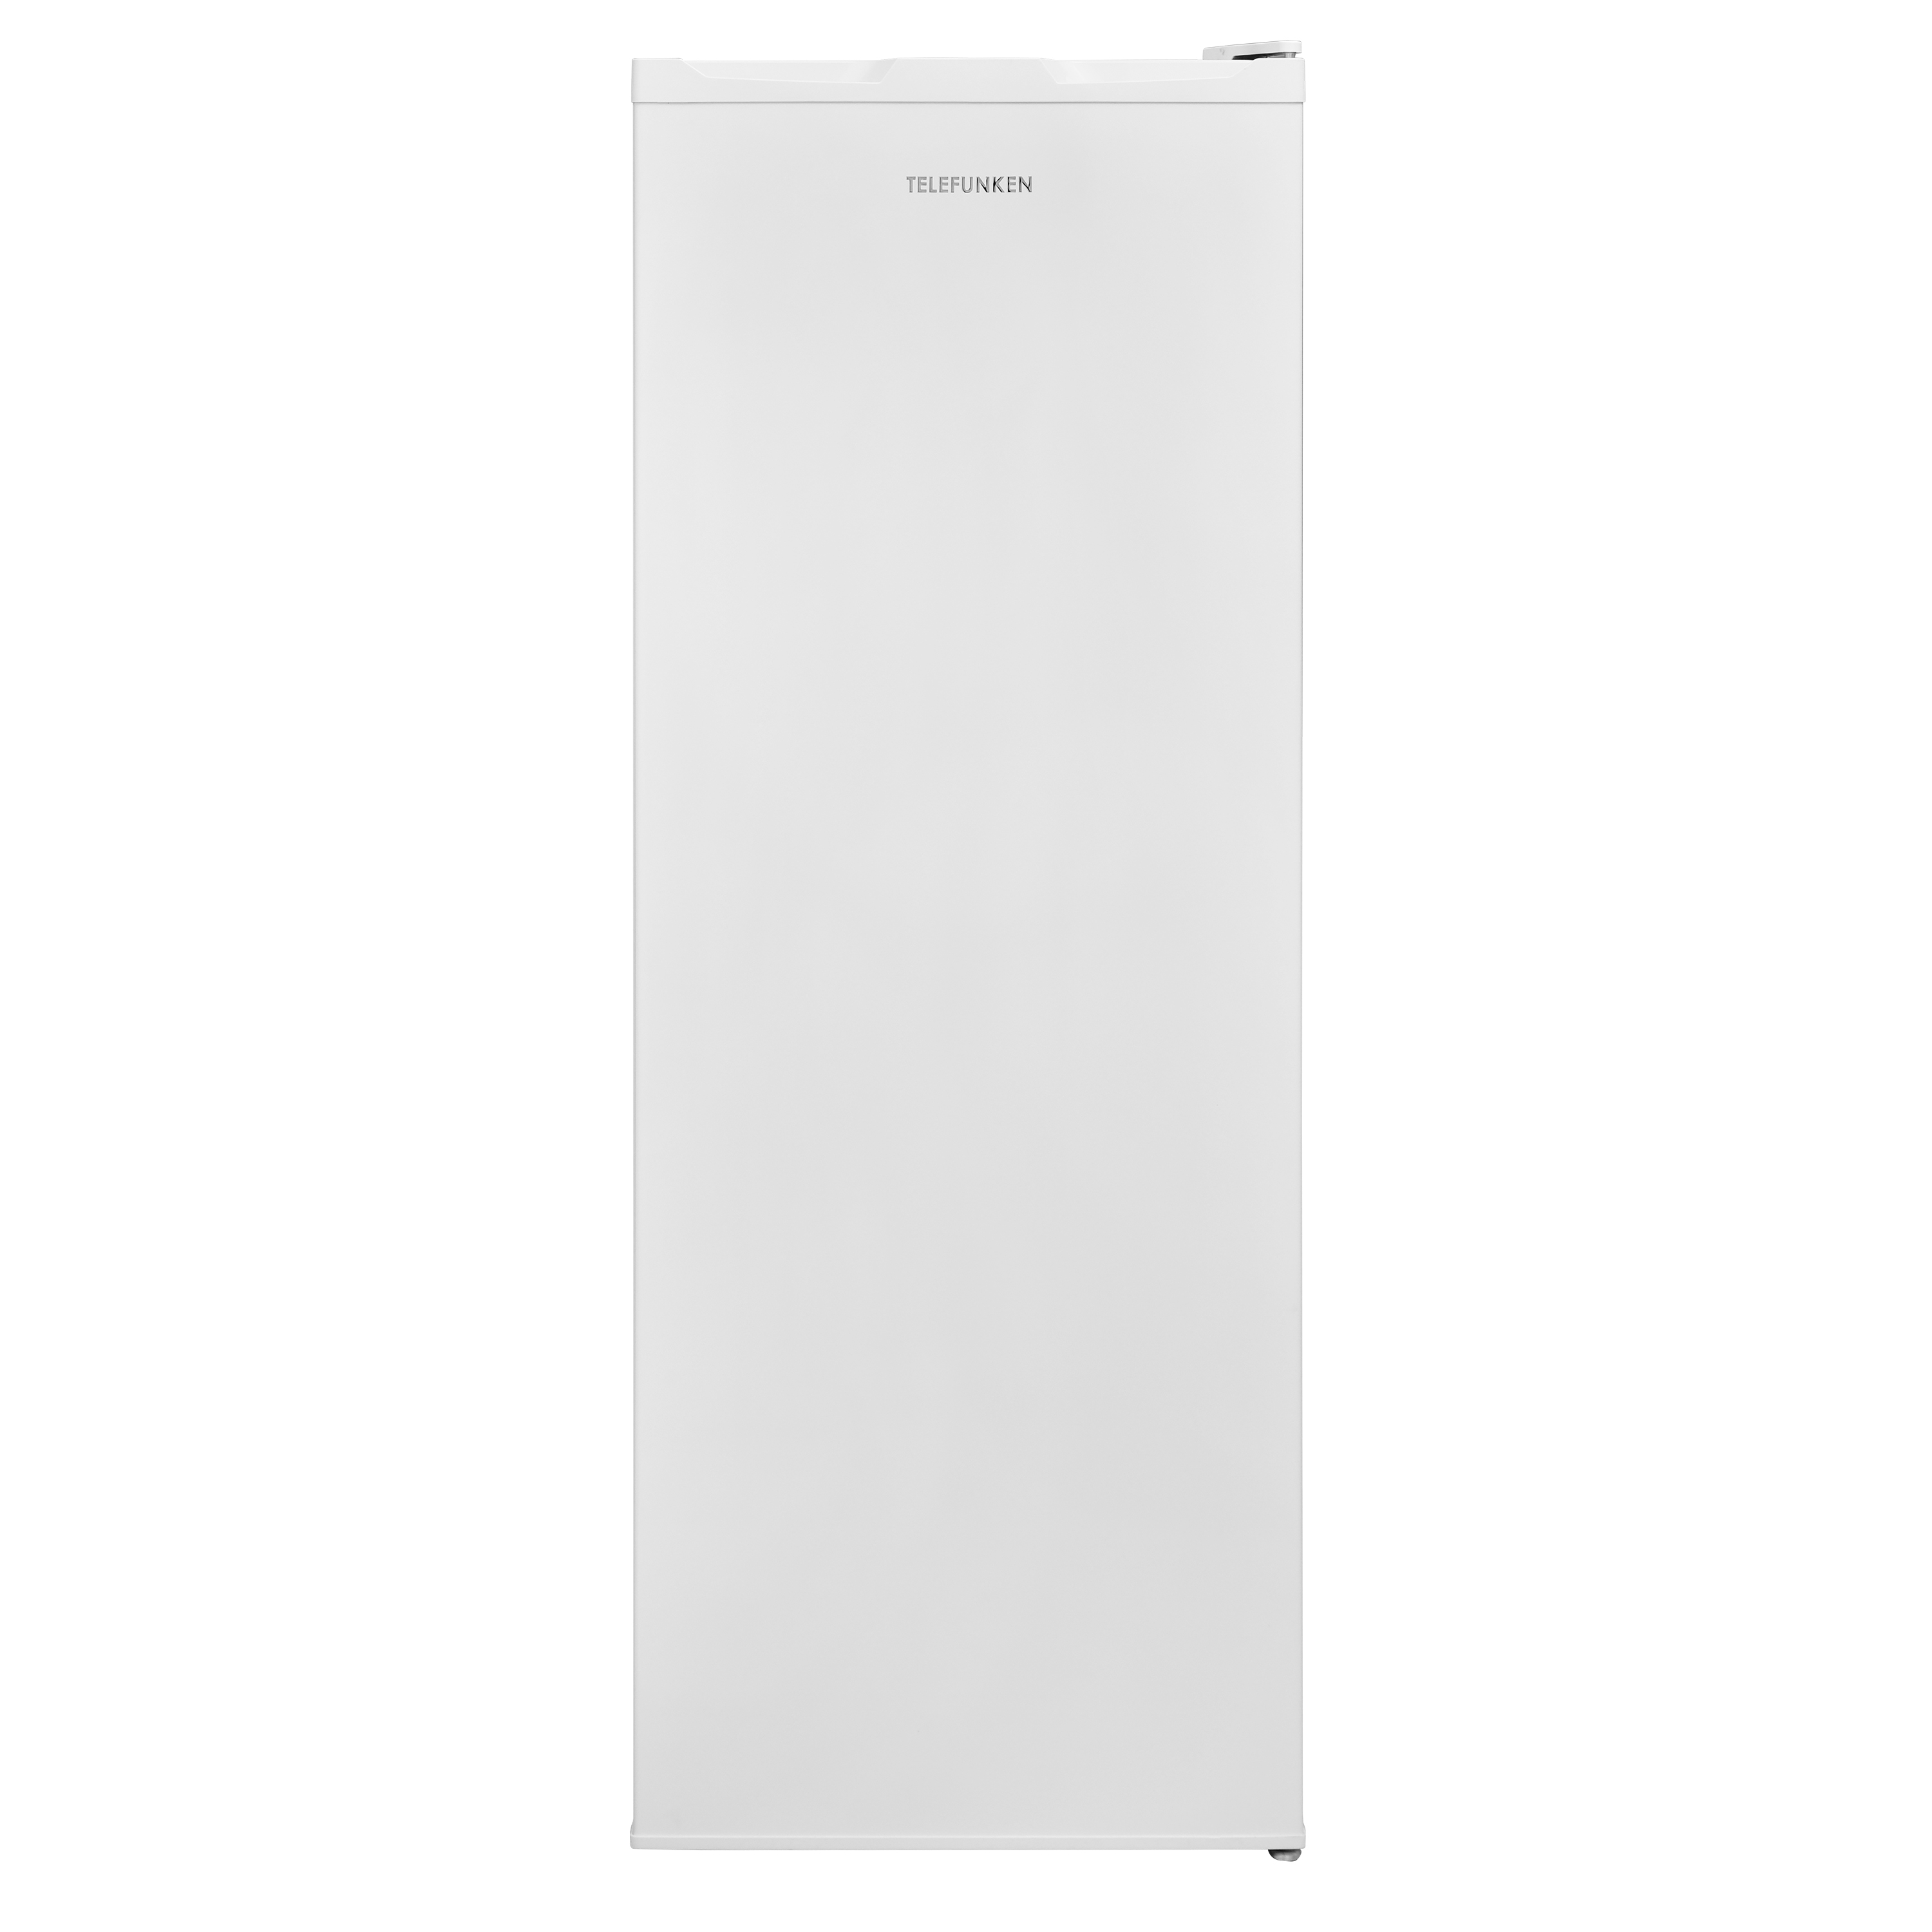 (E, cm hoch, 144 Weiß) TELEFUNKEN KTFK265EW2 Kühlschrank